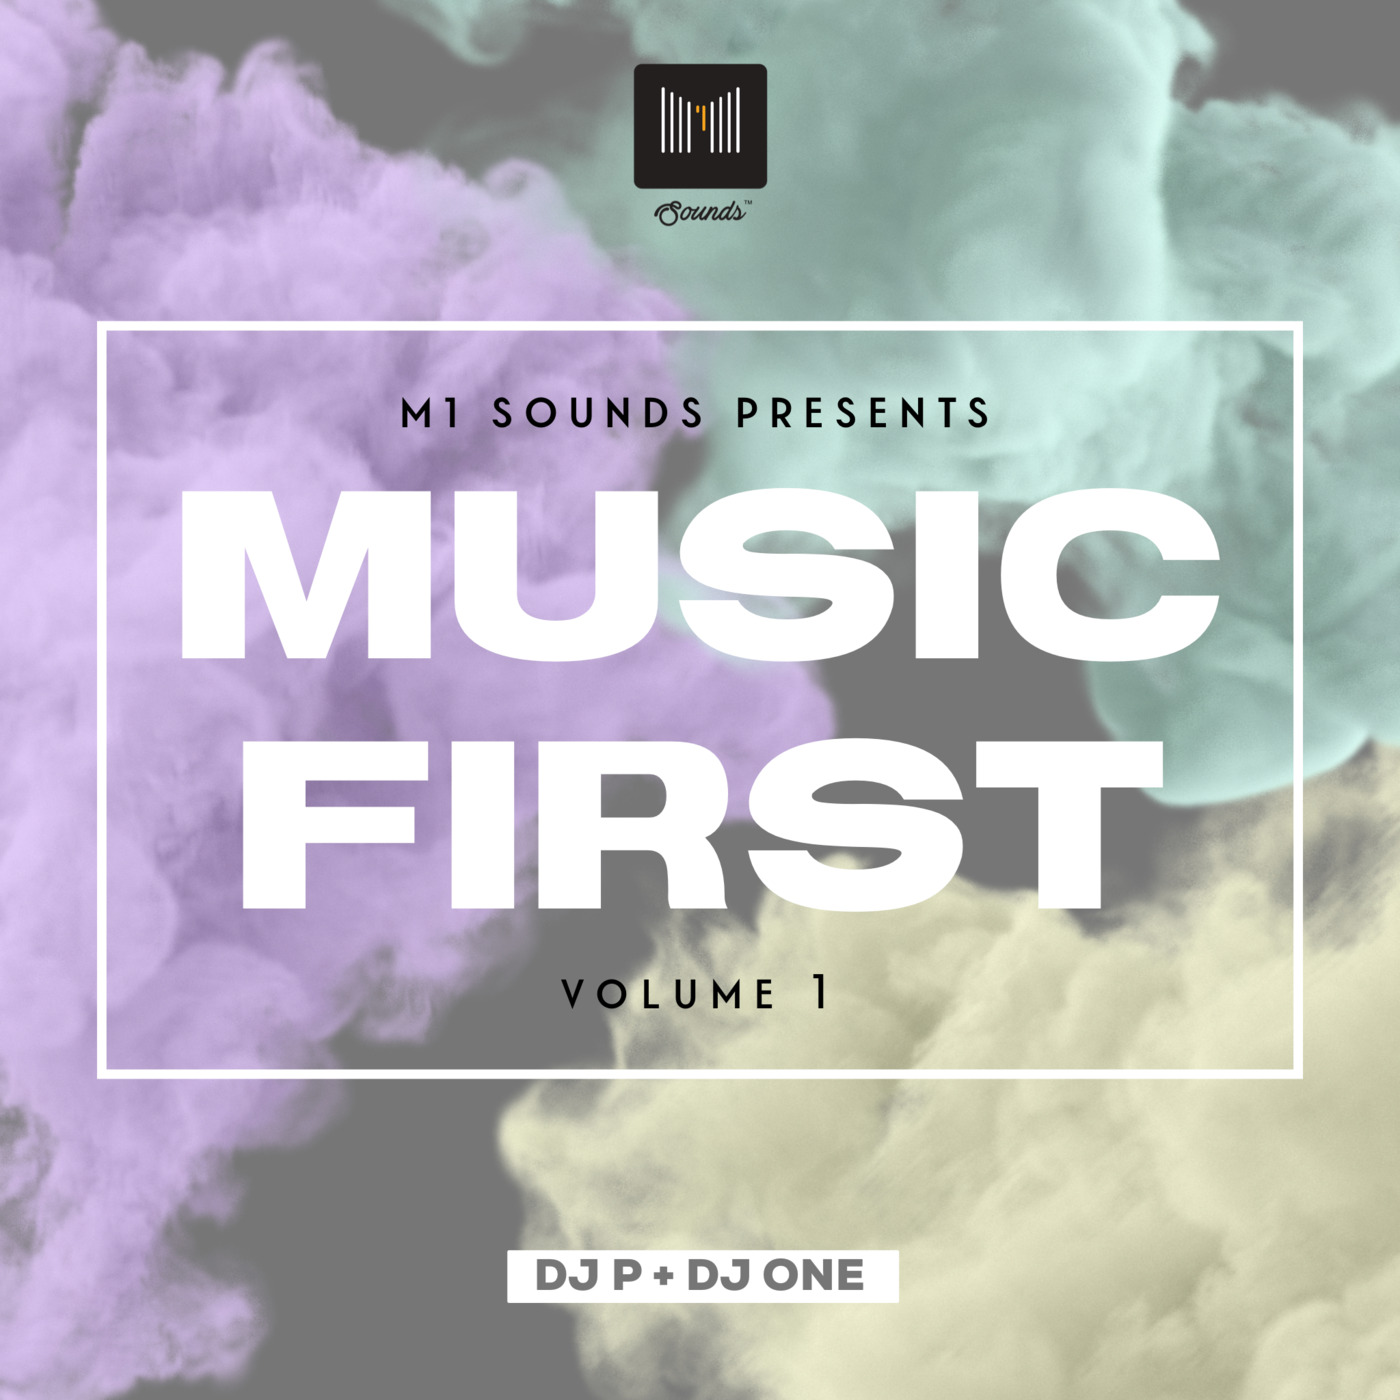 M1Sounds Presents - DJ ONE & DJ P - Music First Vol. 1